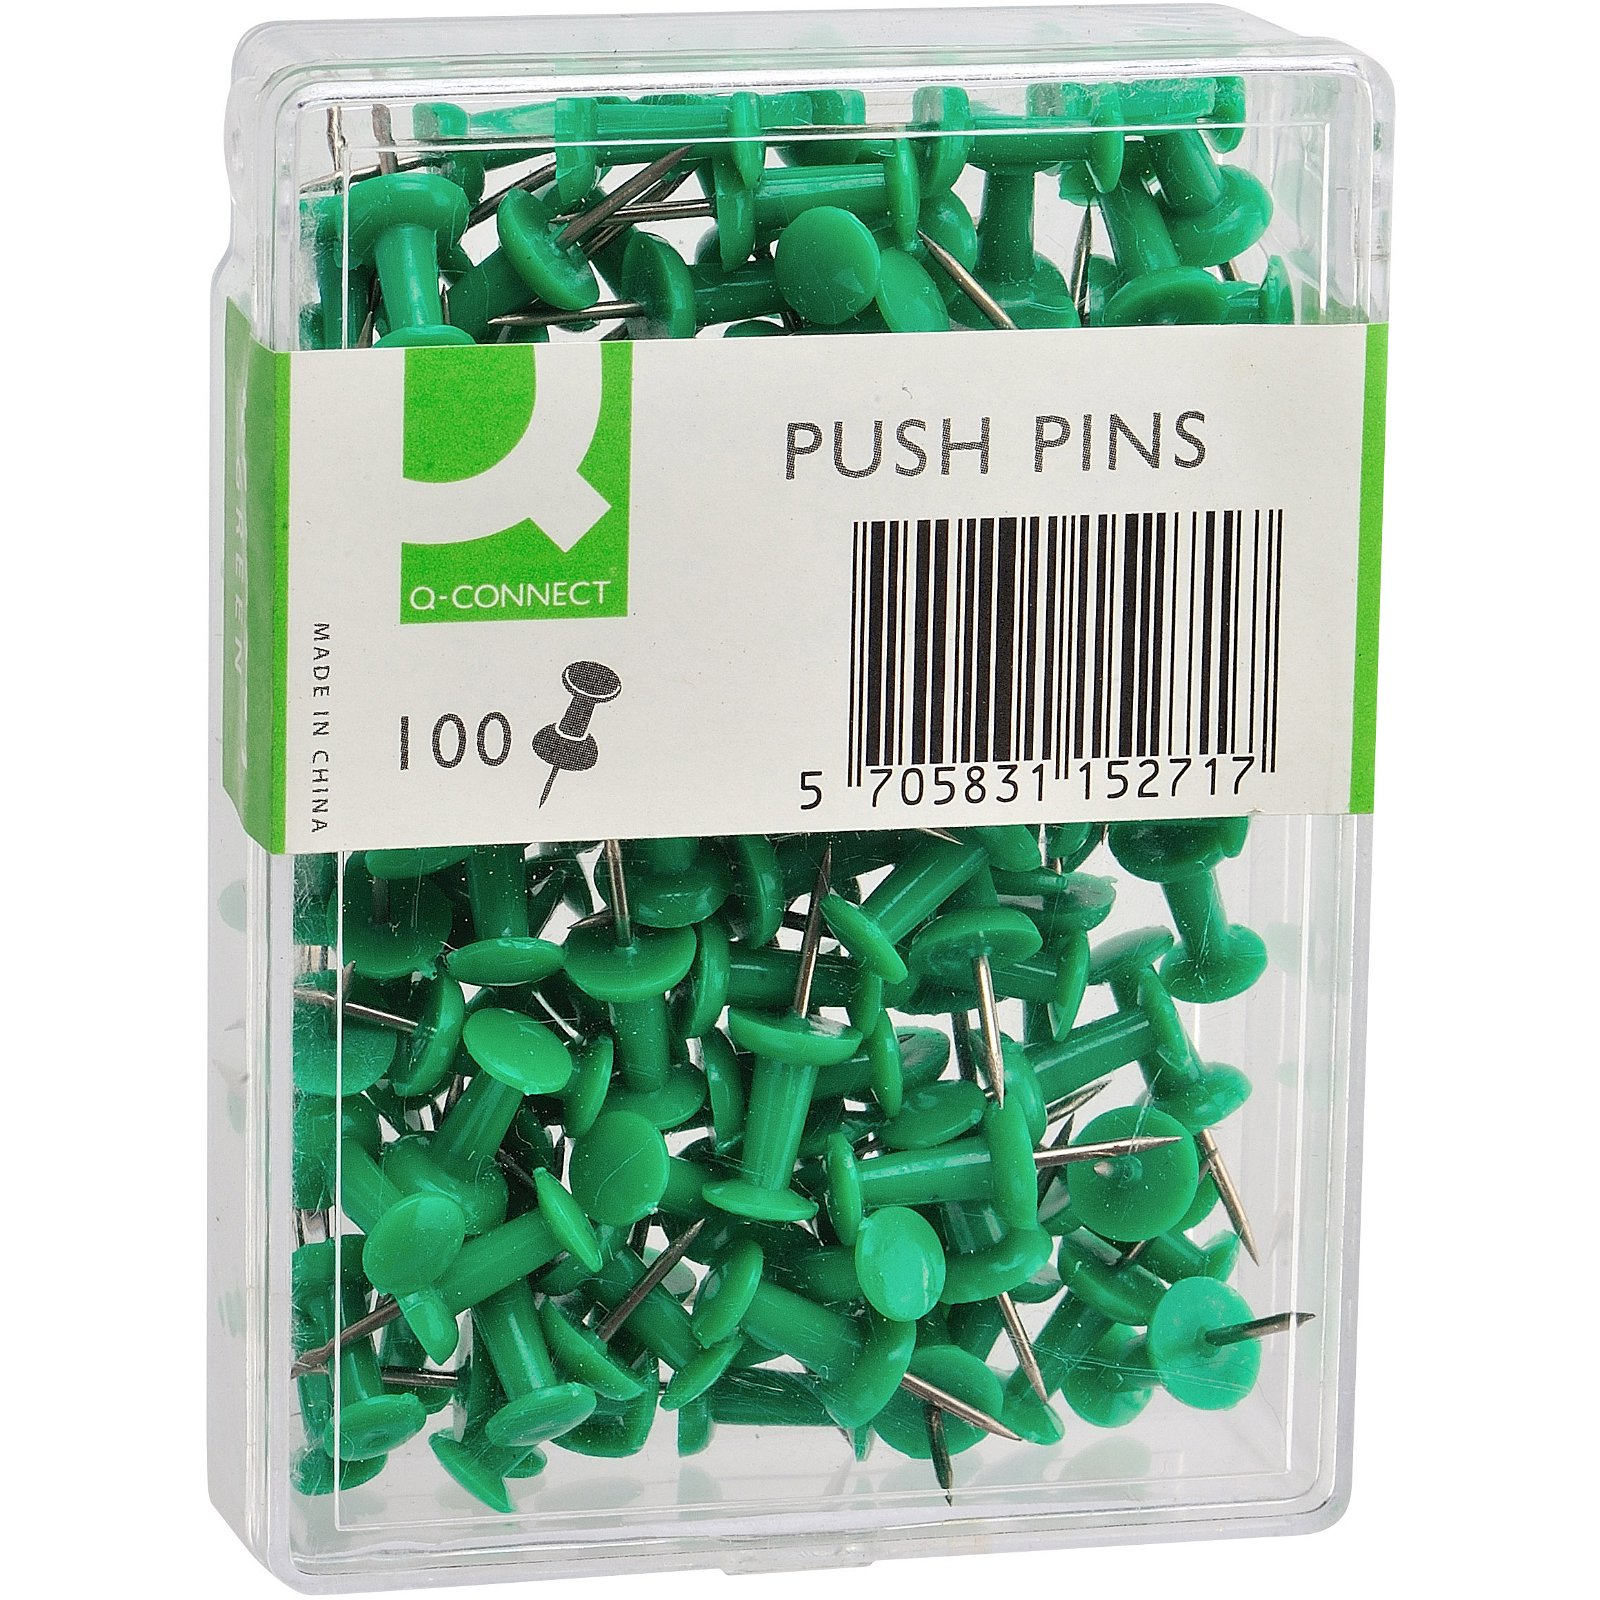 Q-connect push pins